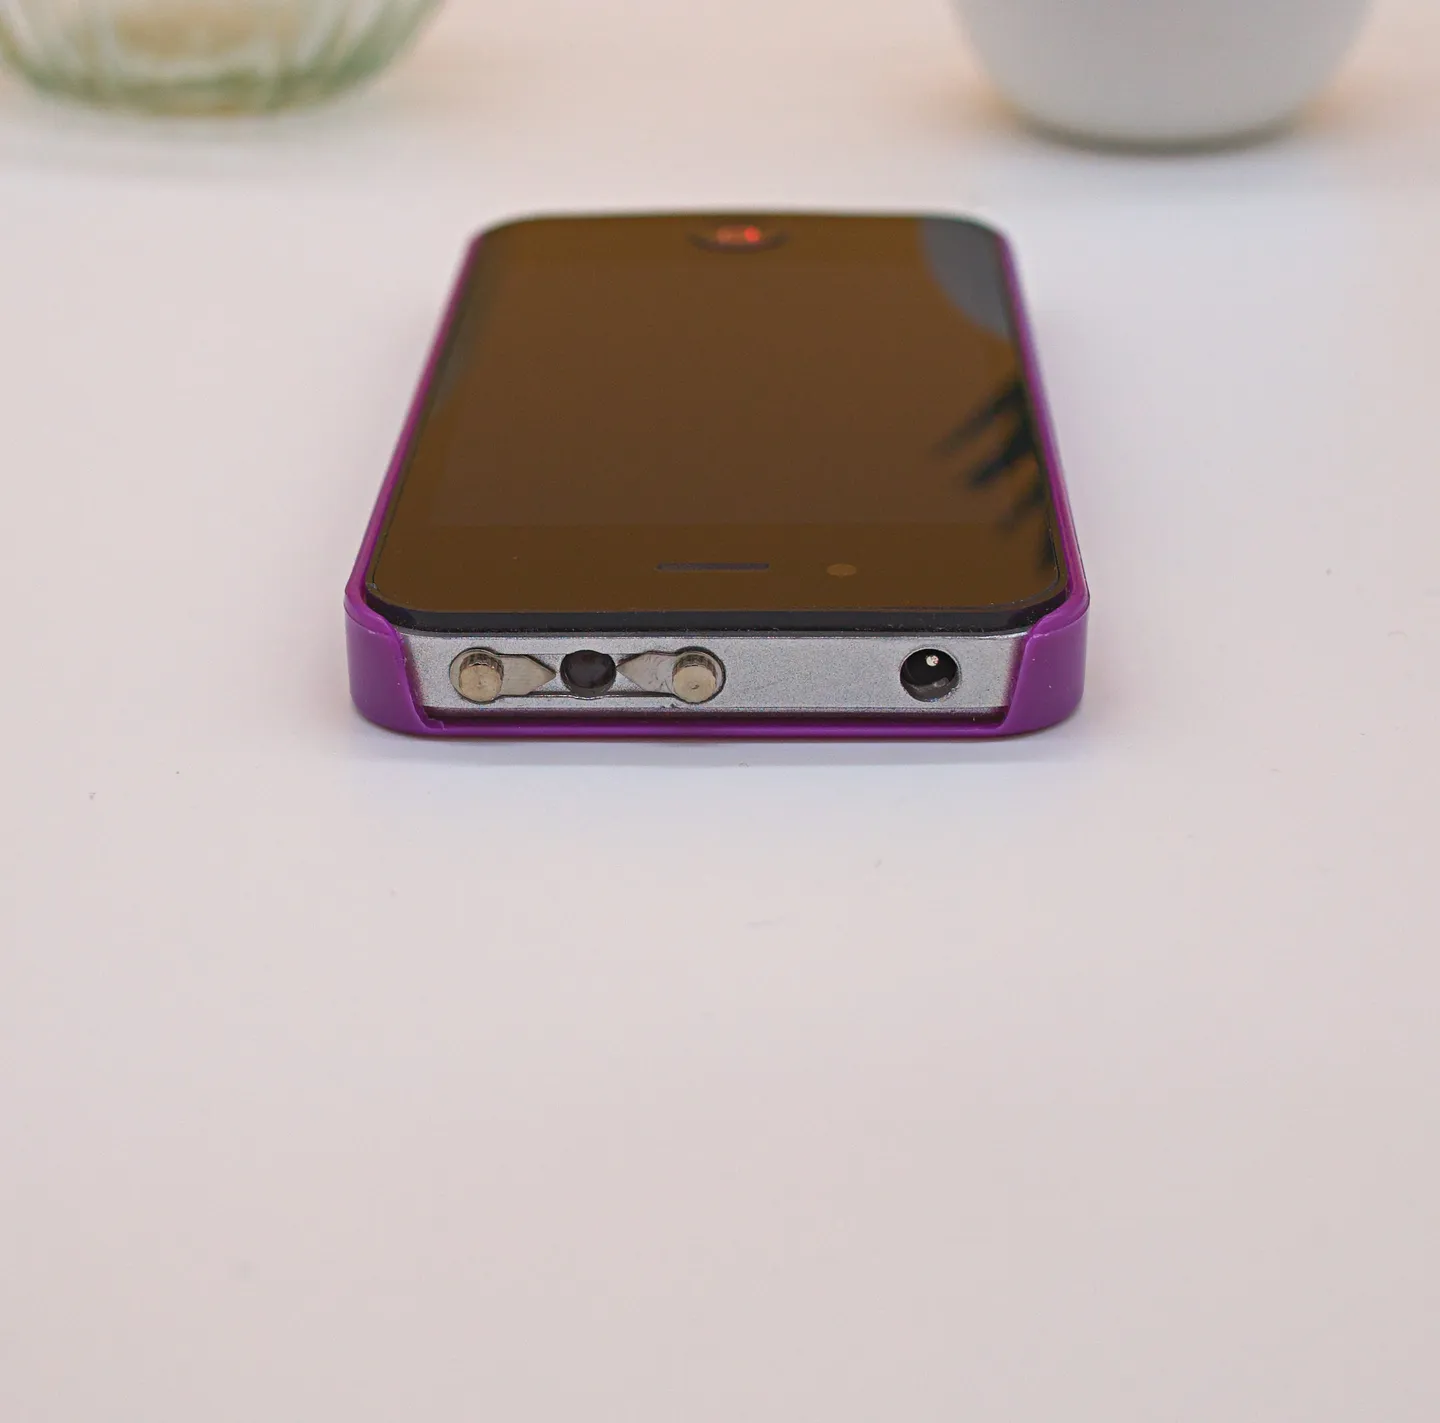 Shocker & Taser - Iphone Shocker Taser, 2 400 000 Voltios elegante y discreto (Versión Violeta)